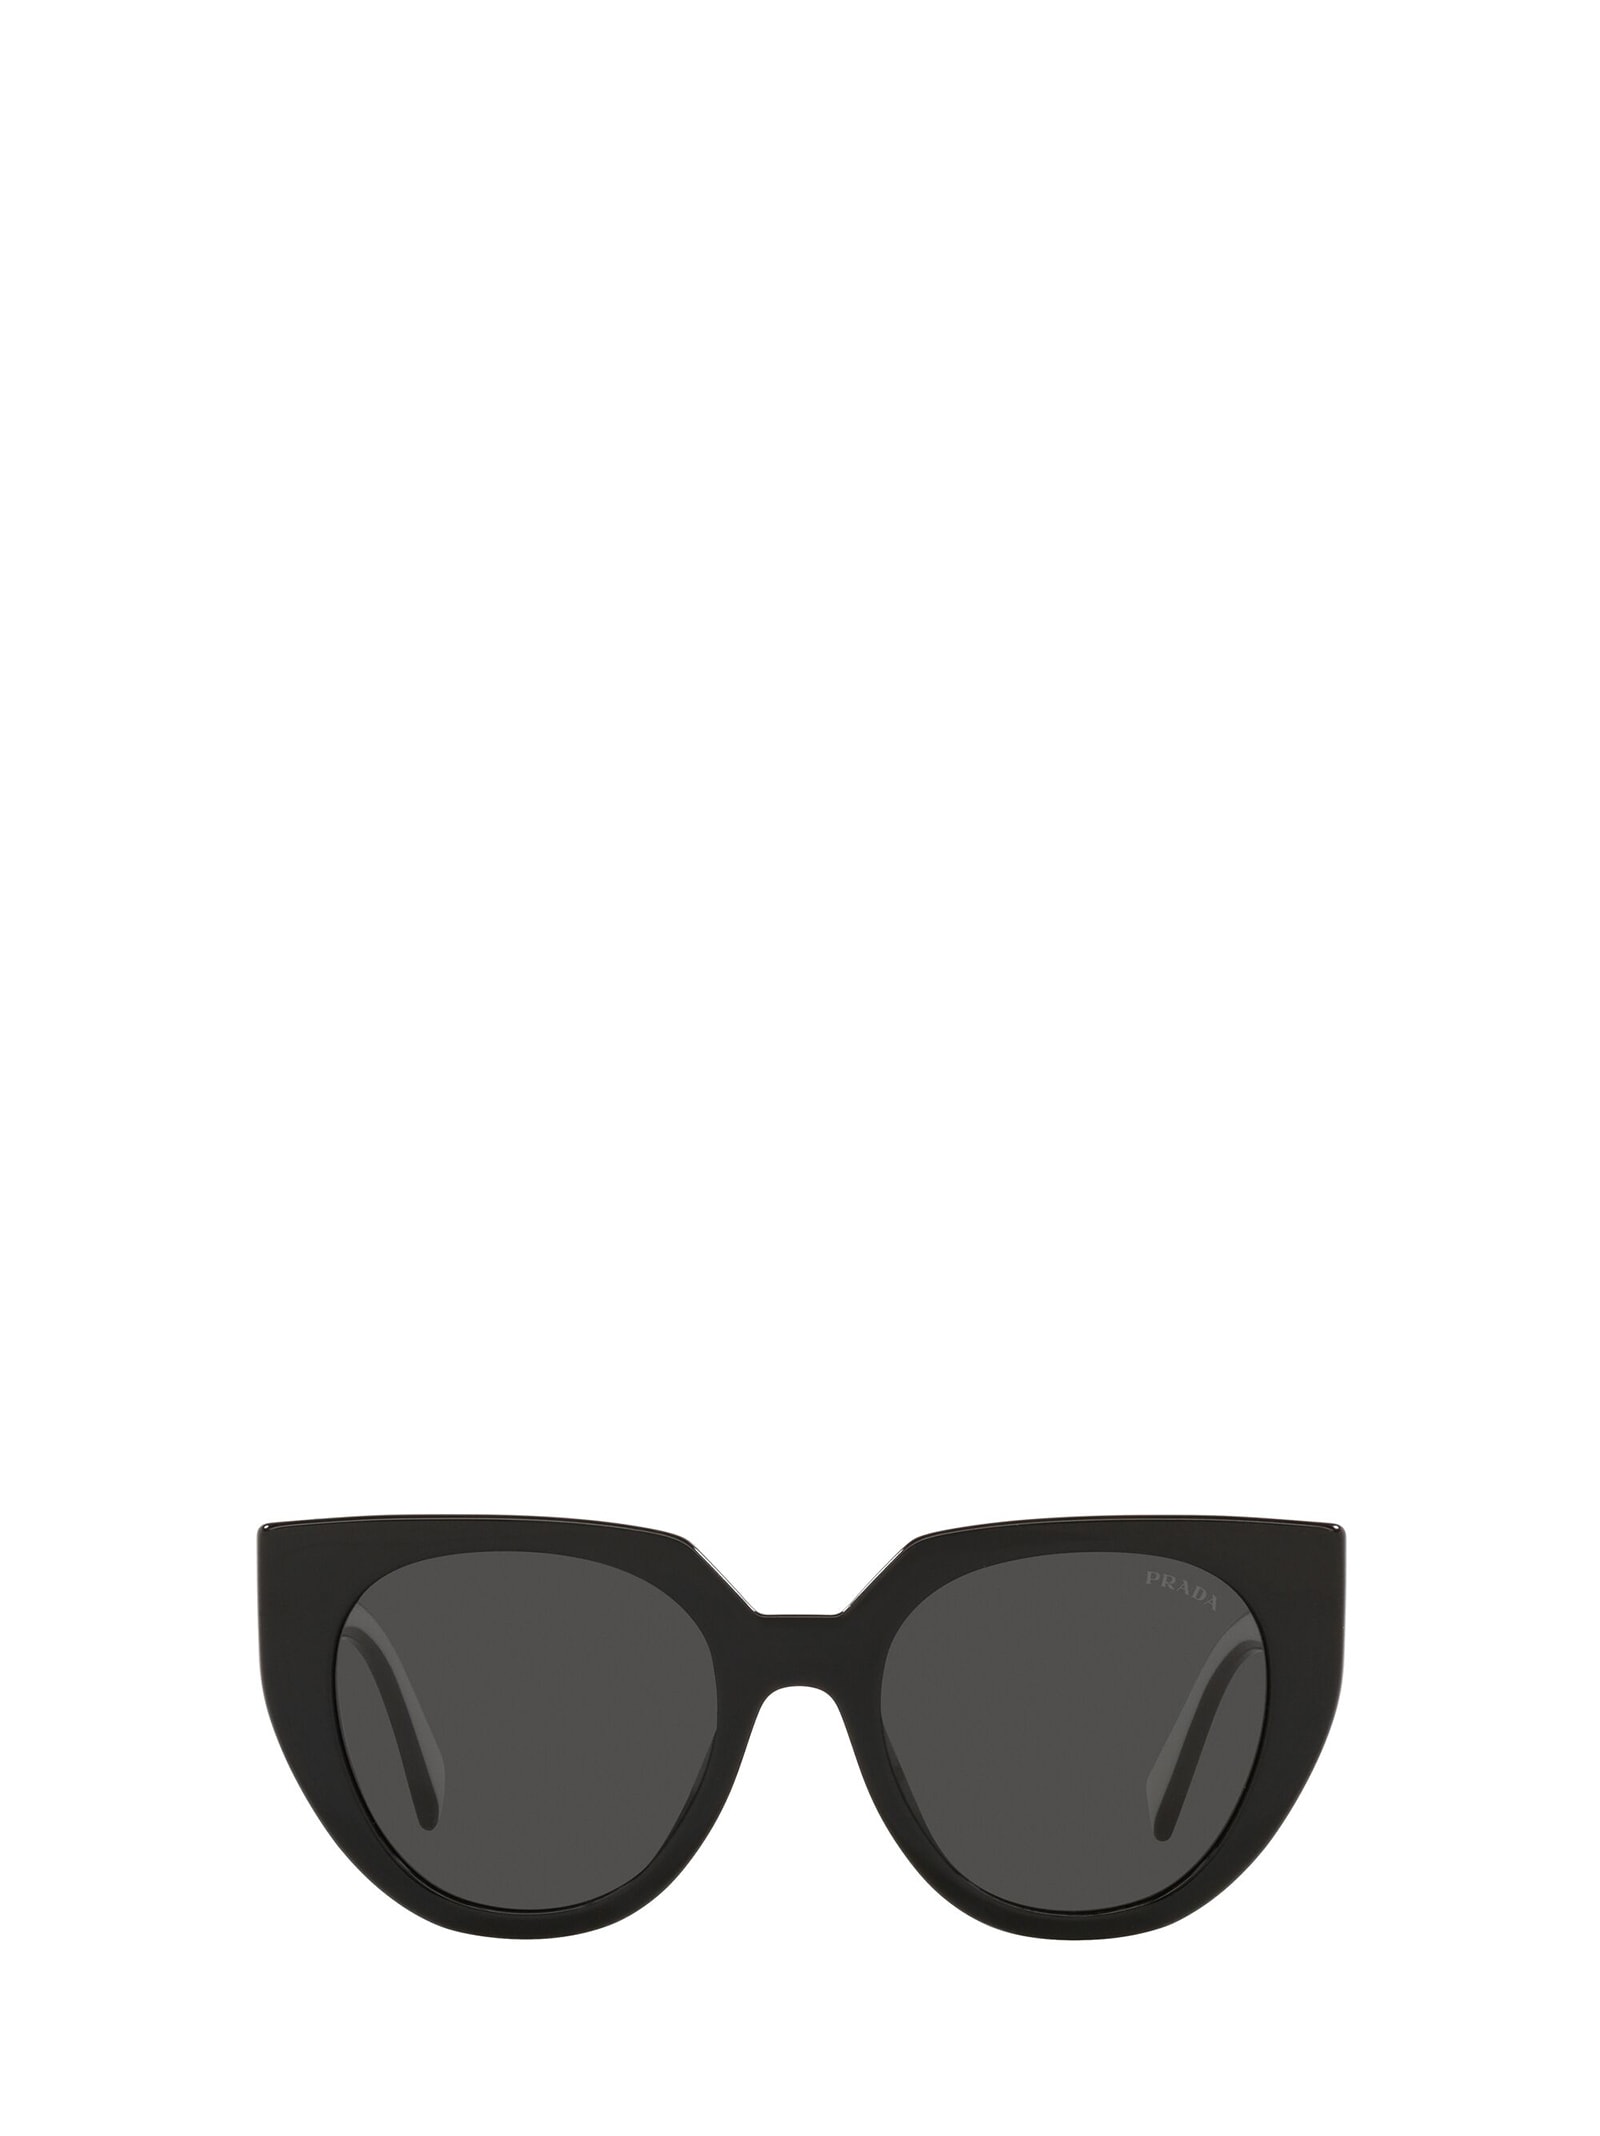 Prada Eyewear Pr 14ws Black / Talc Sunglasses